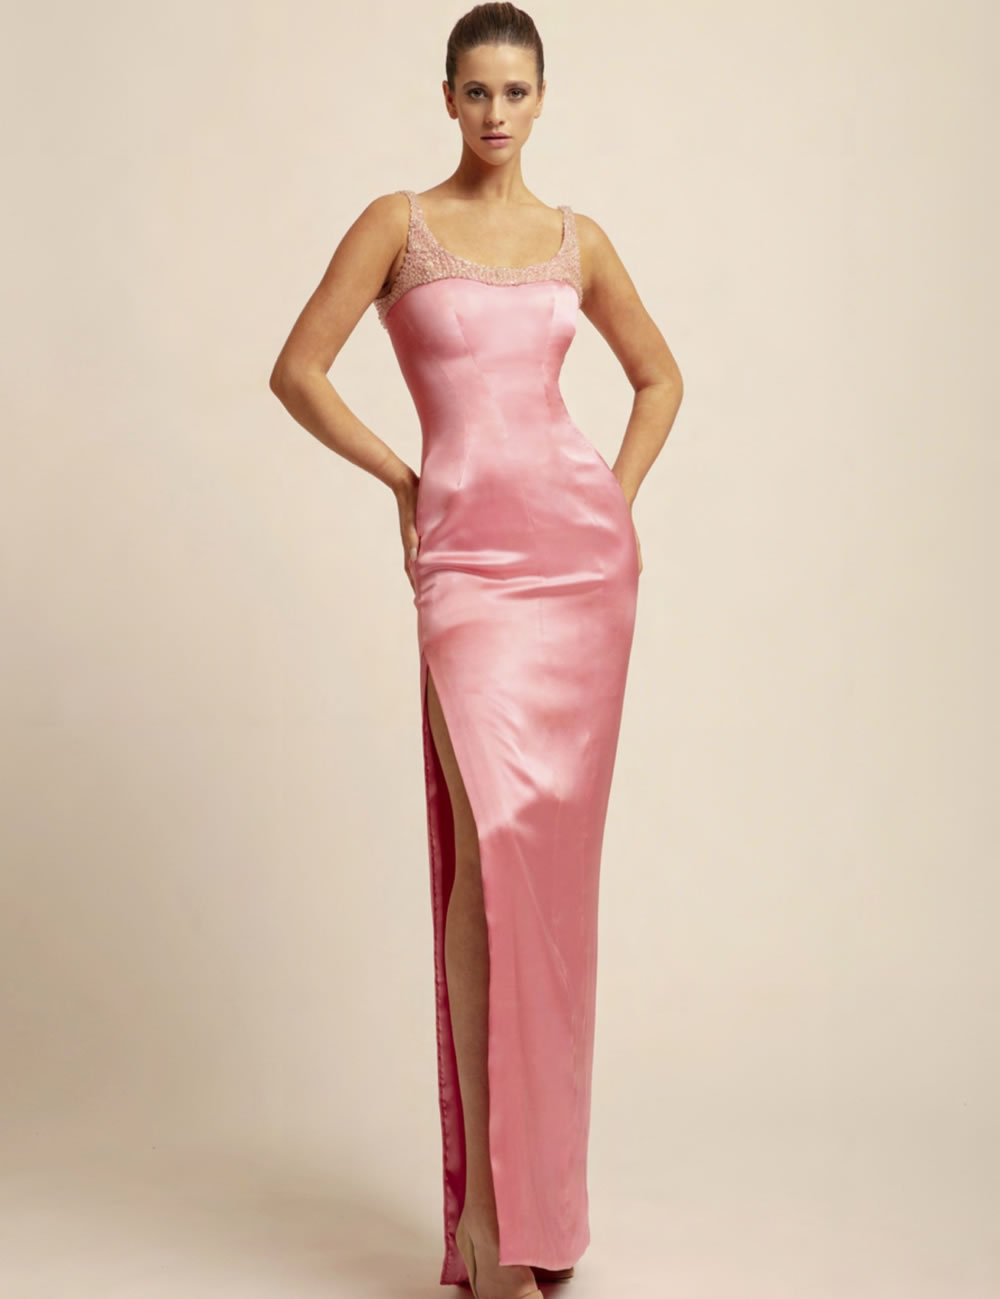 Benveniste Couture pink dress